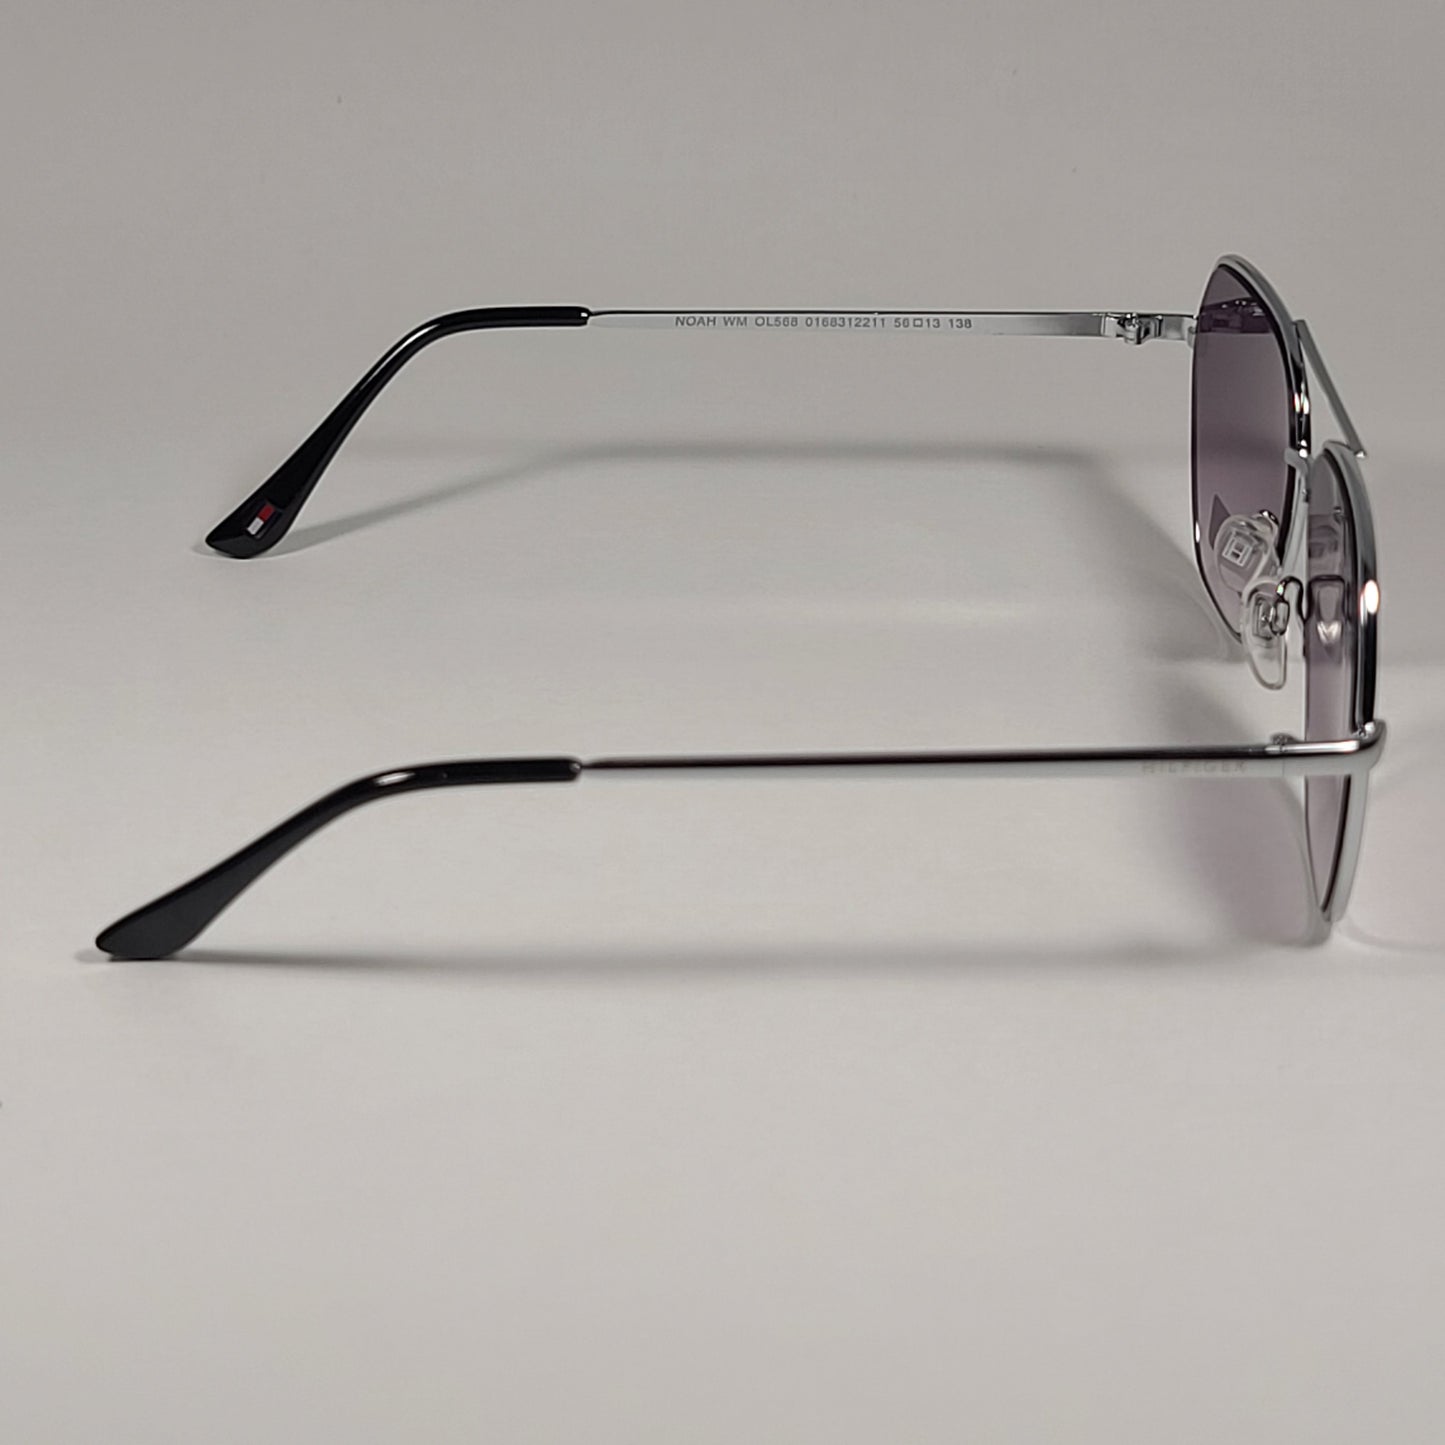 Tommy Hilfiger Noah Pentagon Pilot Sunglasses Silver Metal Smoke Gradient Lens NOAH WM OL568 - Sunglasses